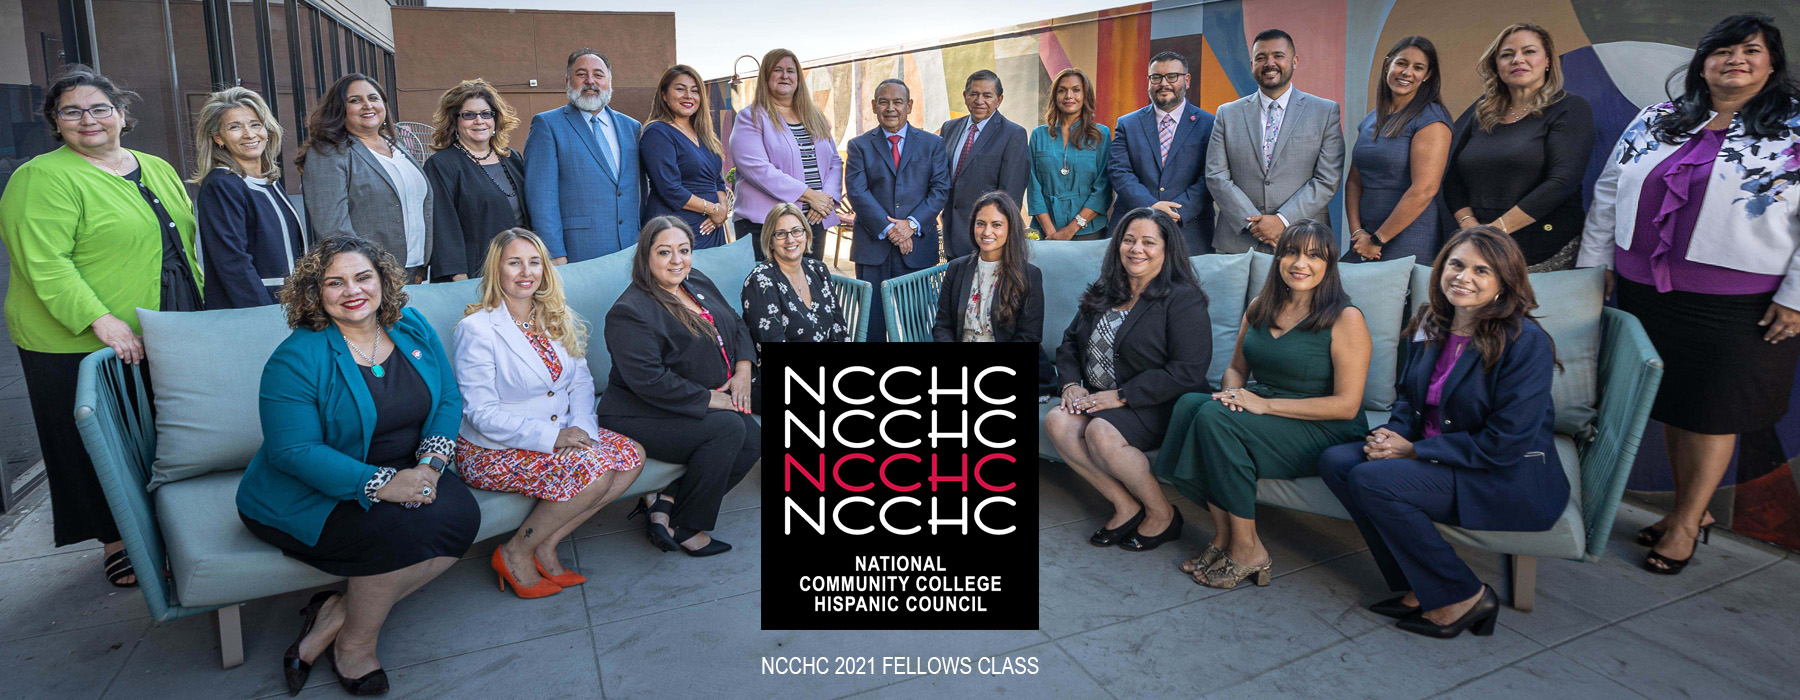 NCCHC: National Community College Hispanic Council, 2021 Fellow Class